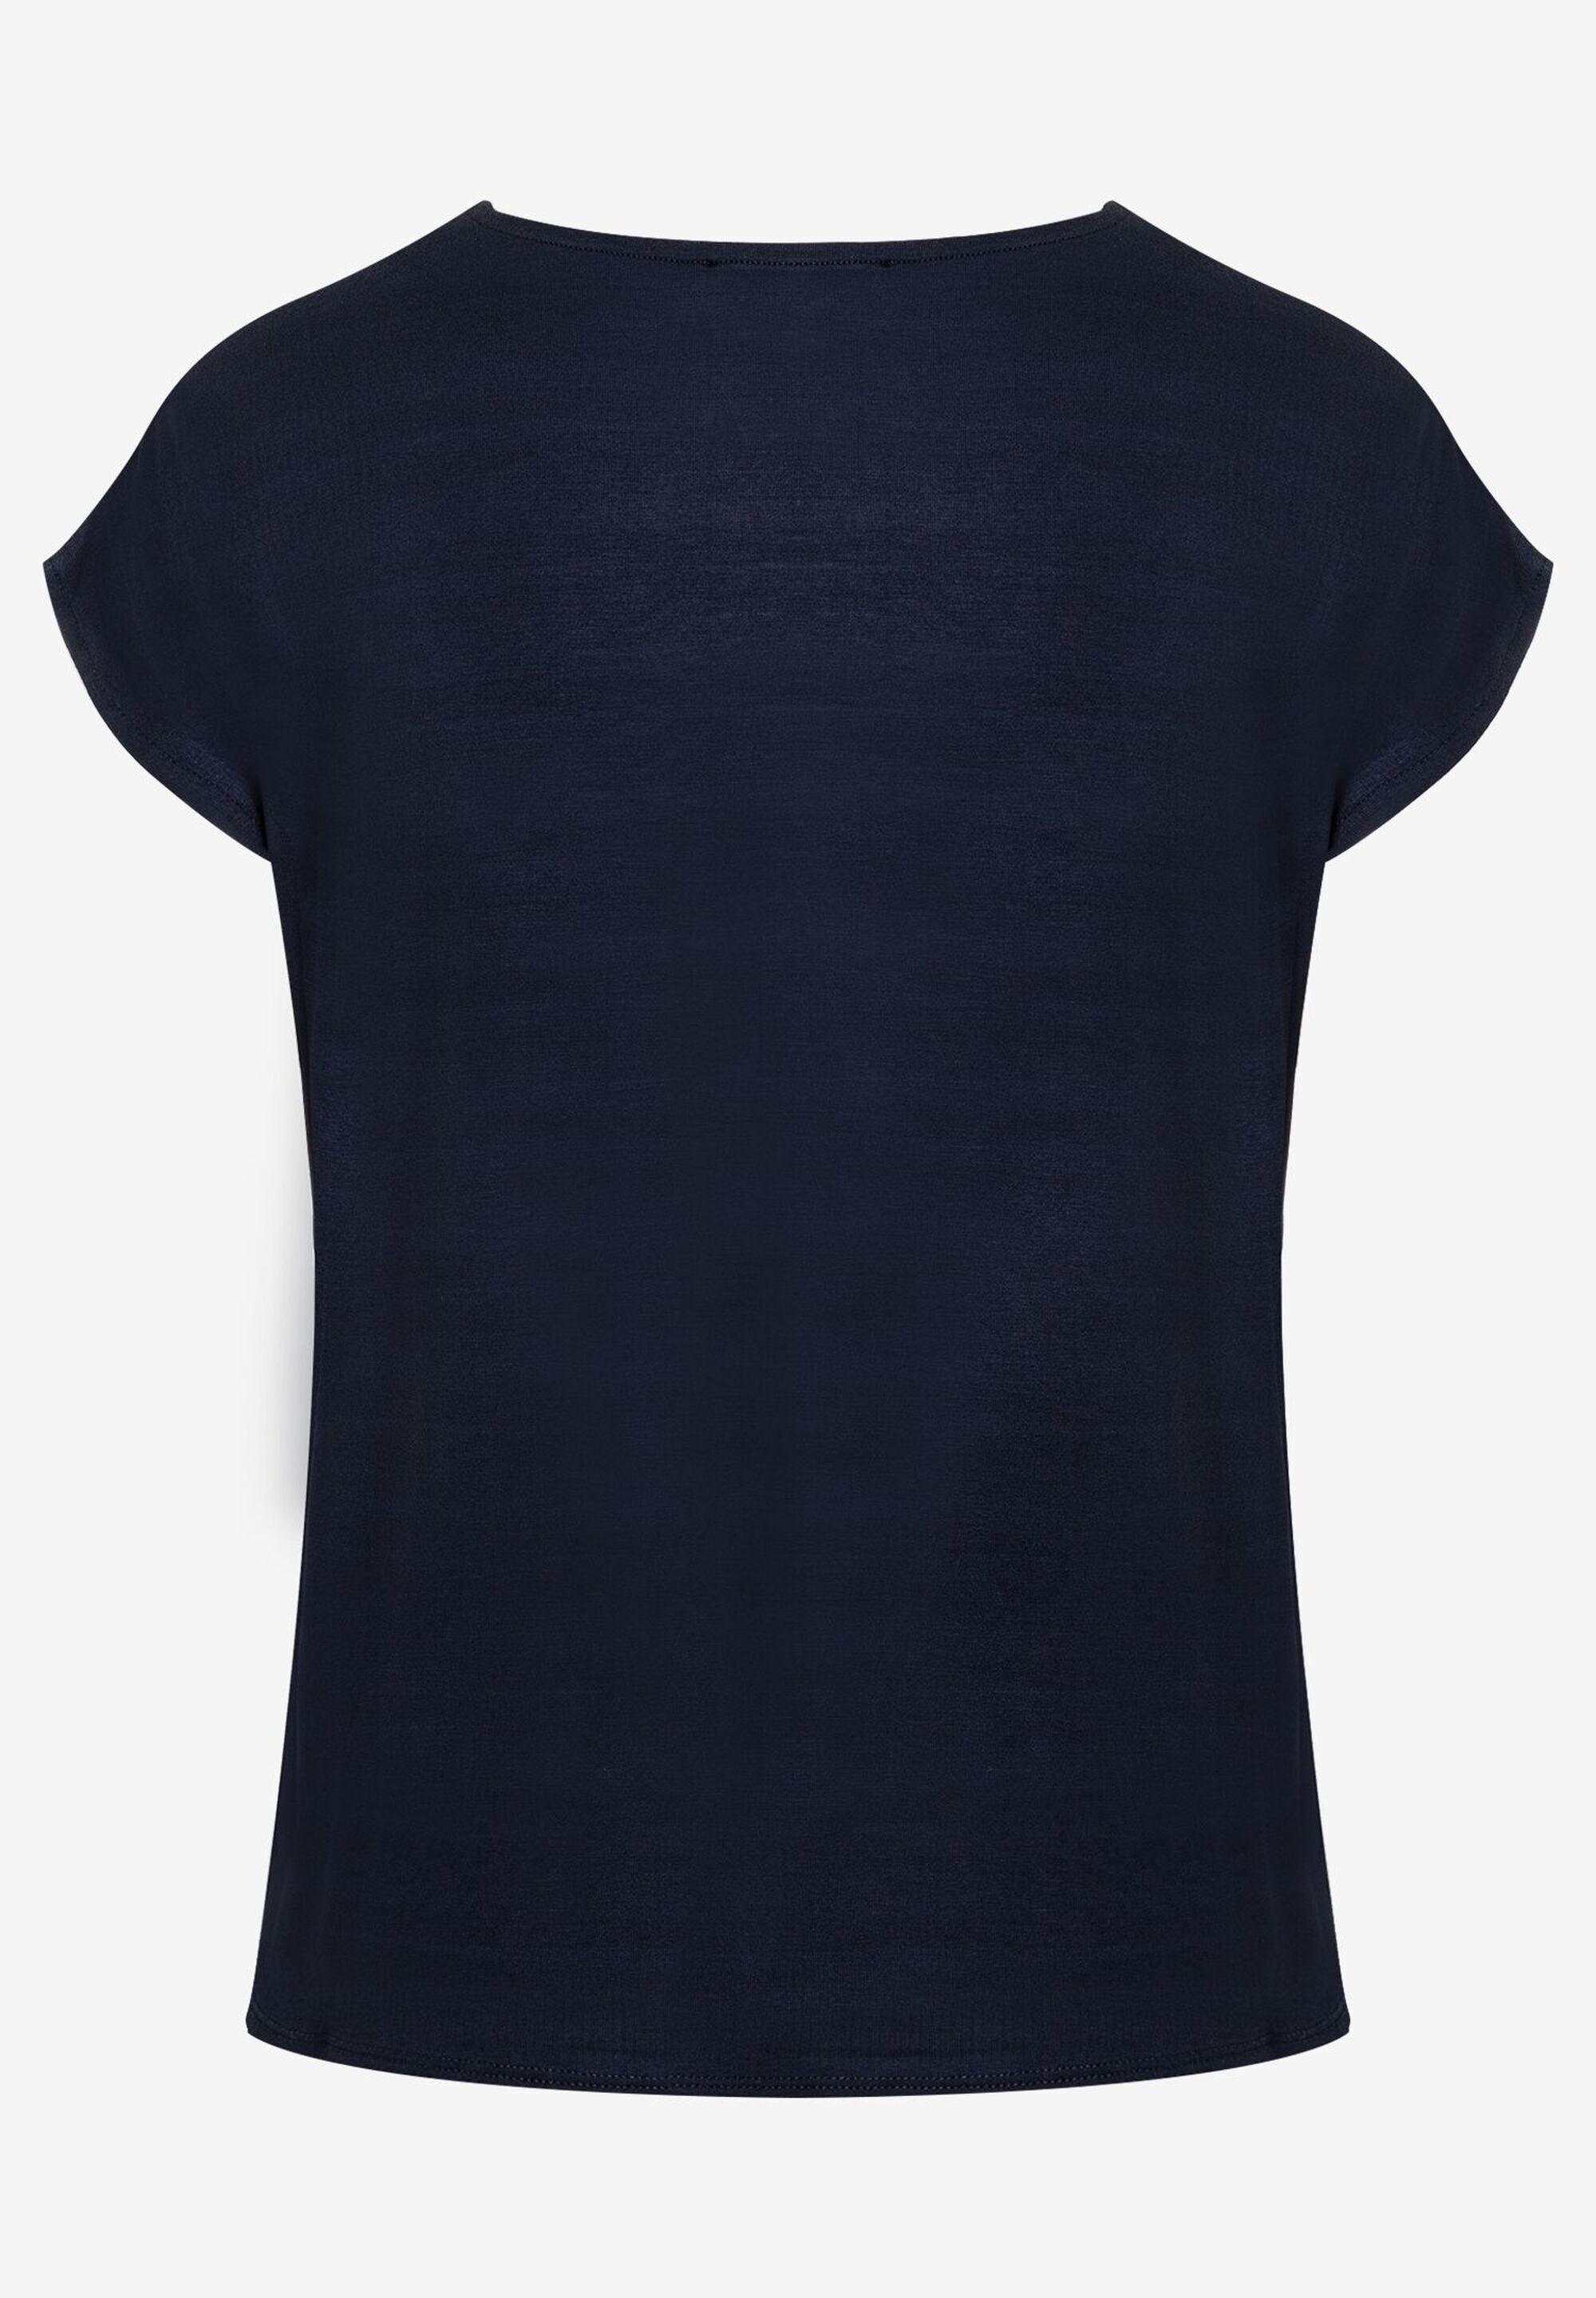 Navy &amp; Light Blue Graphic Print Blouse Shirt_41820470_5309_04